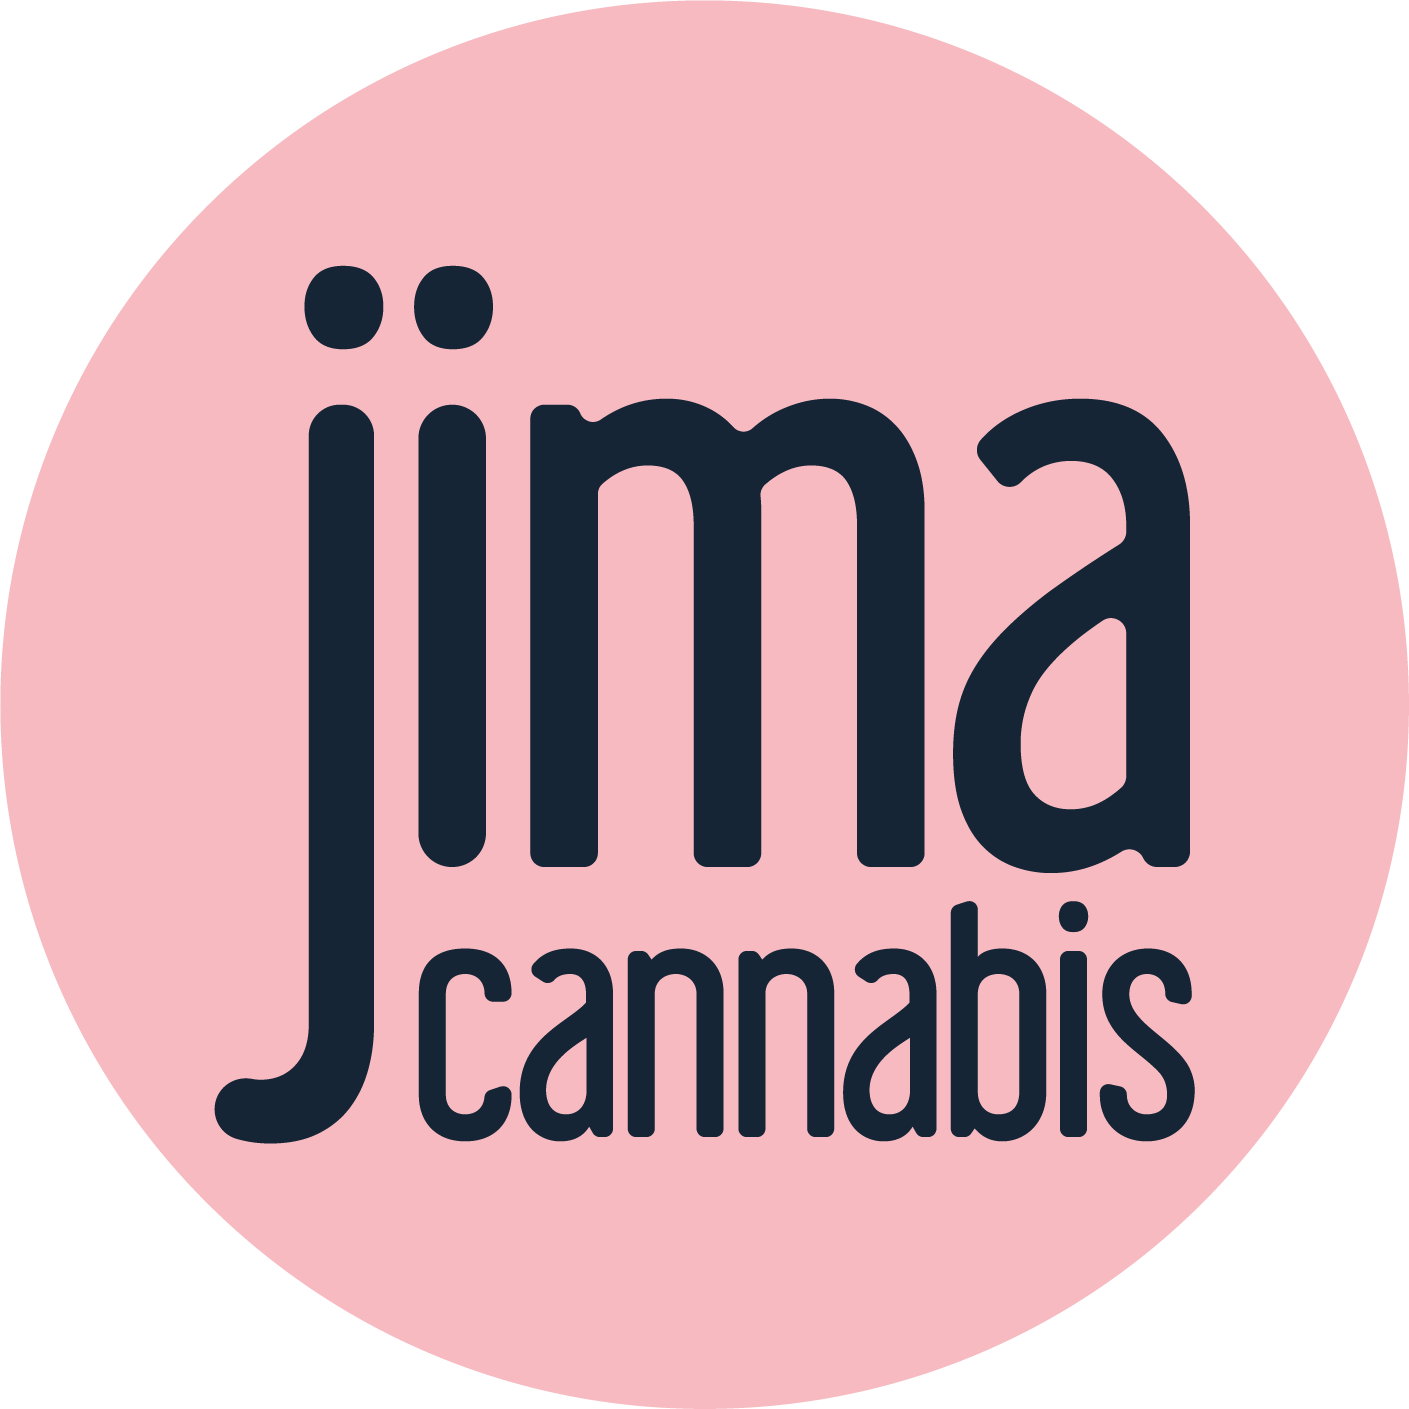 Jima Cannabis